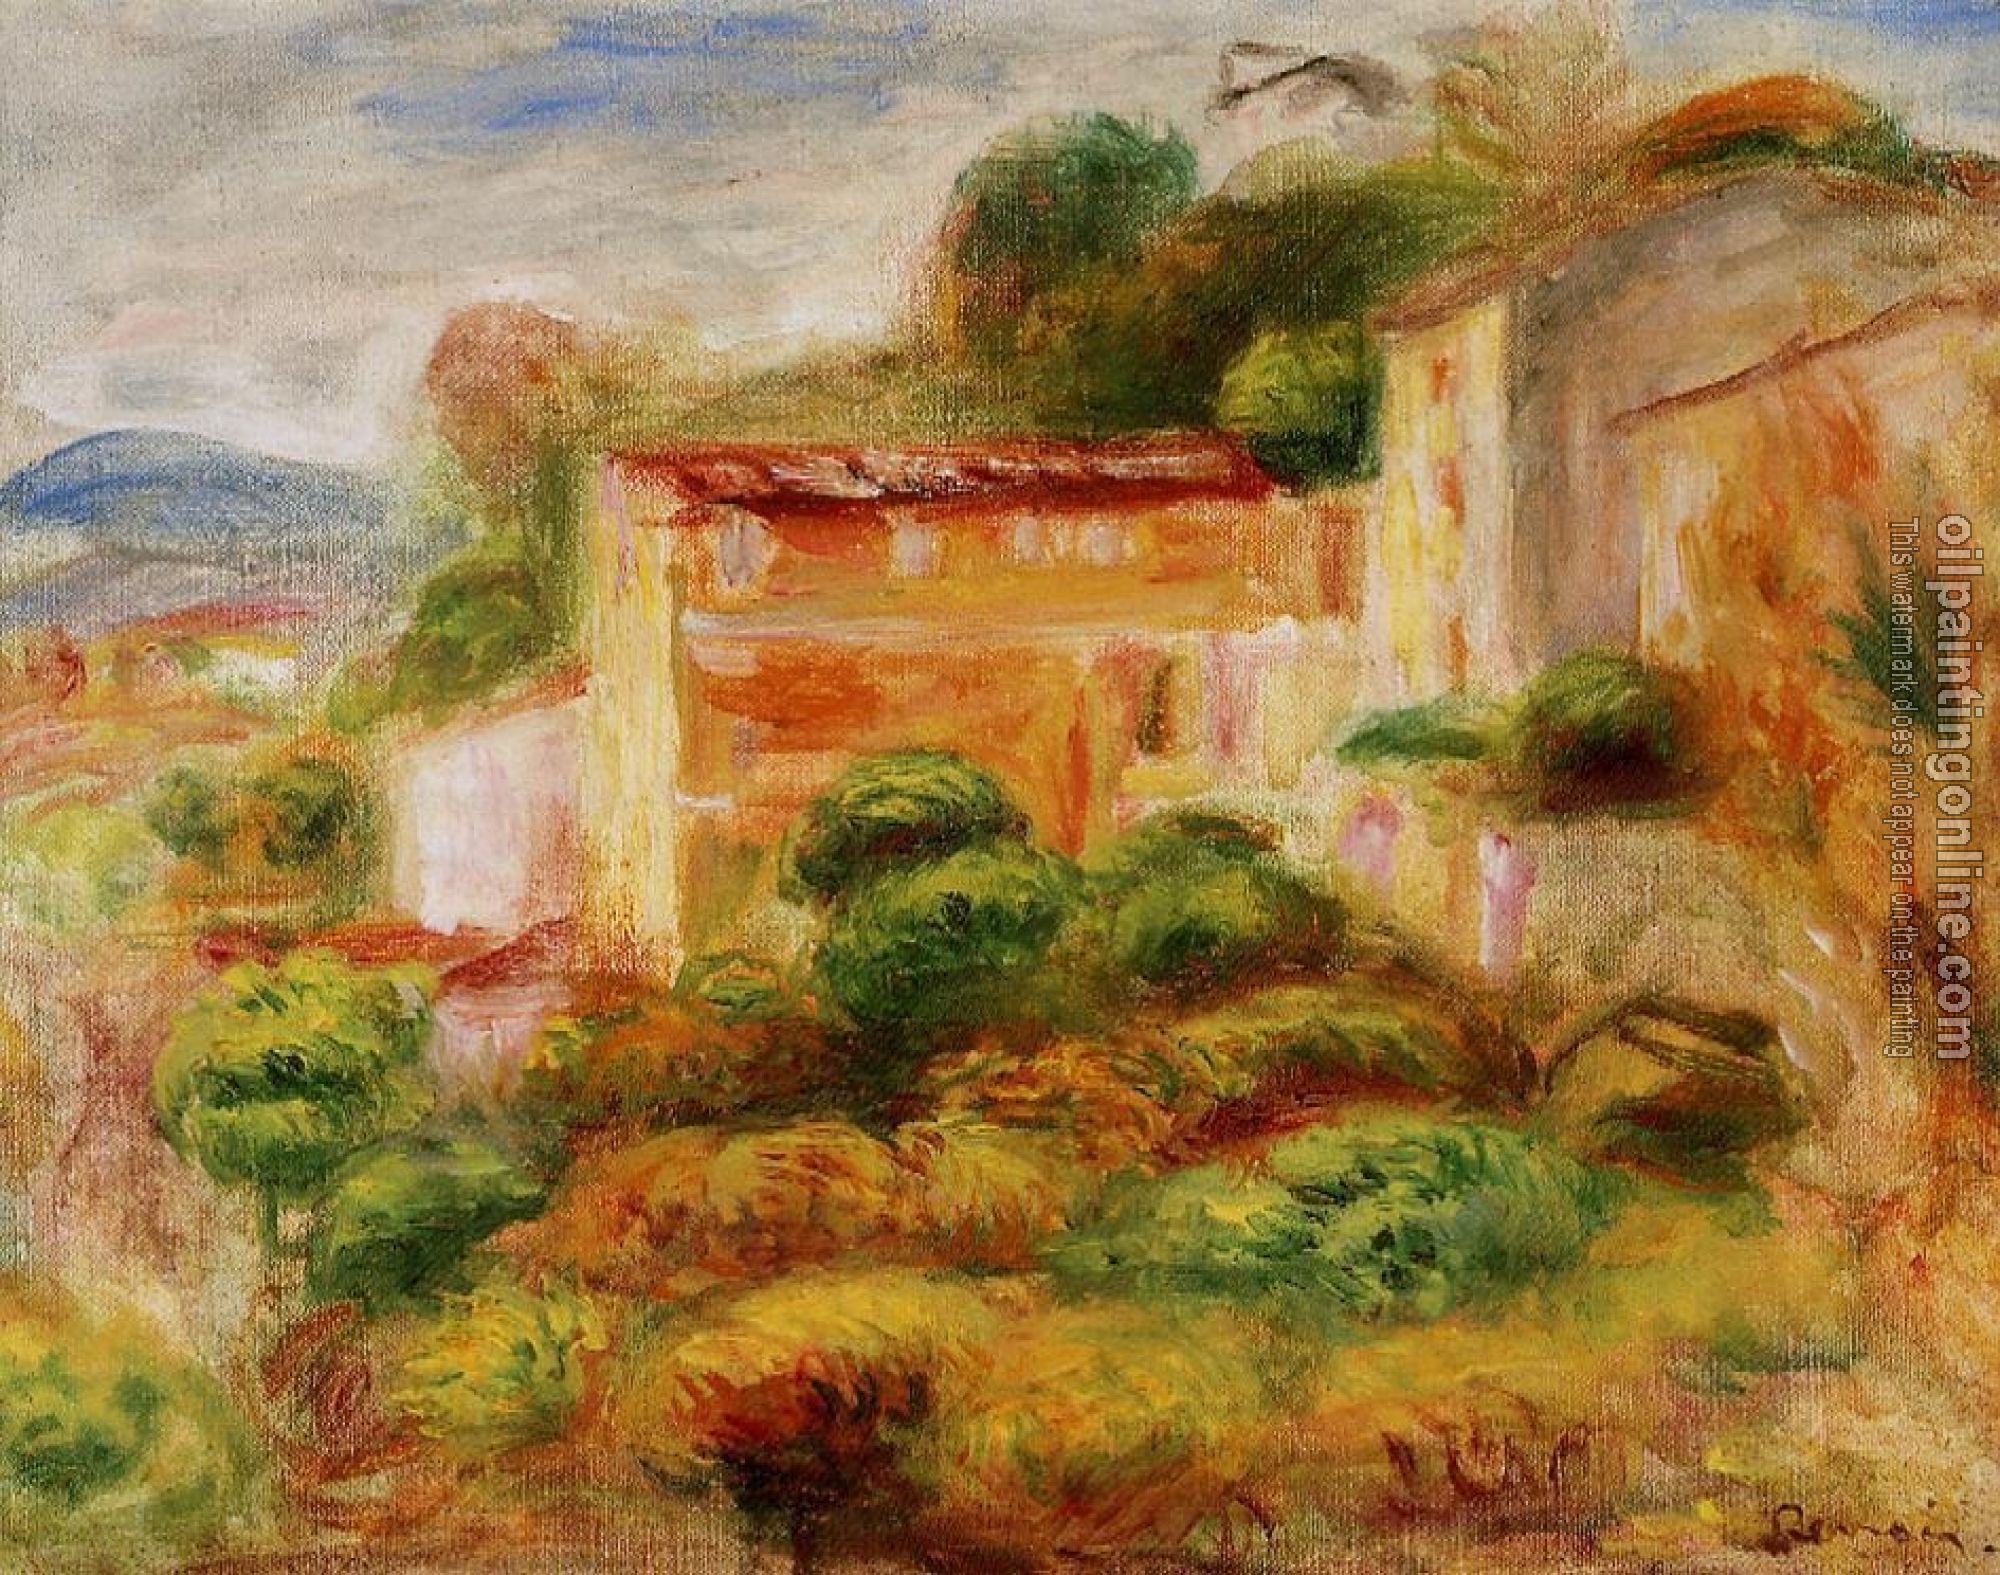 Renoir, Pierre Auguste - La Maison de la Poste